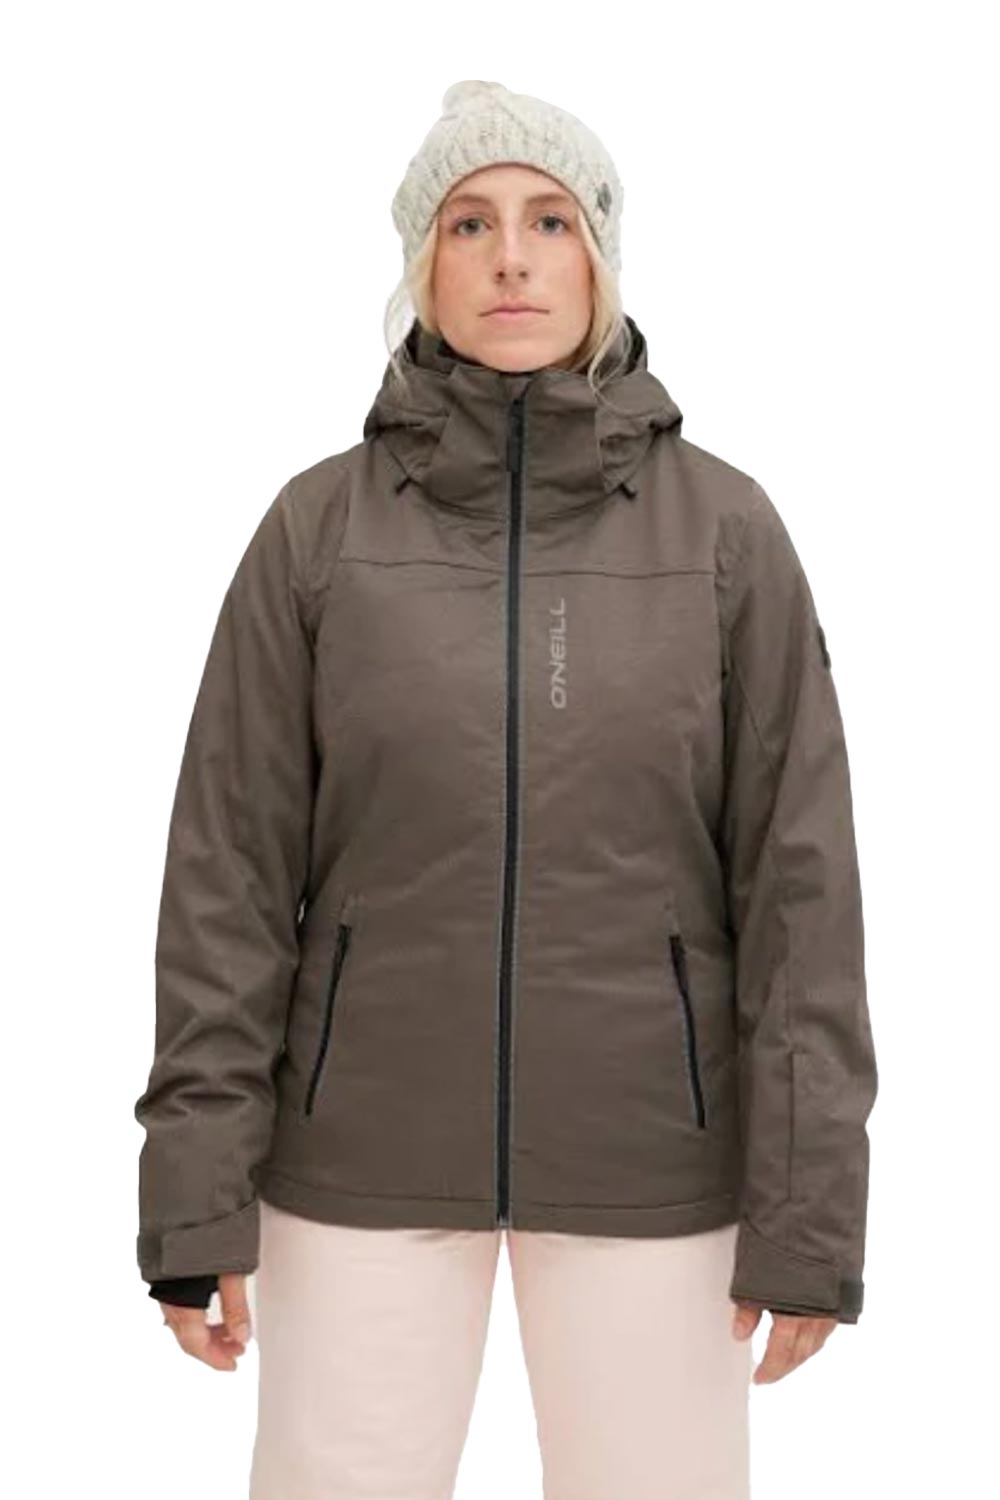 women's O'Neill snowboard jacket, brown